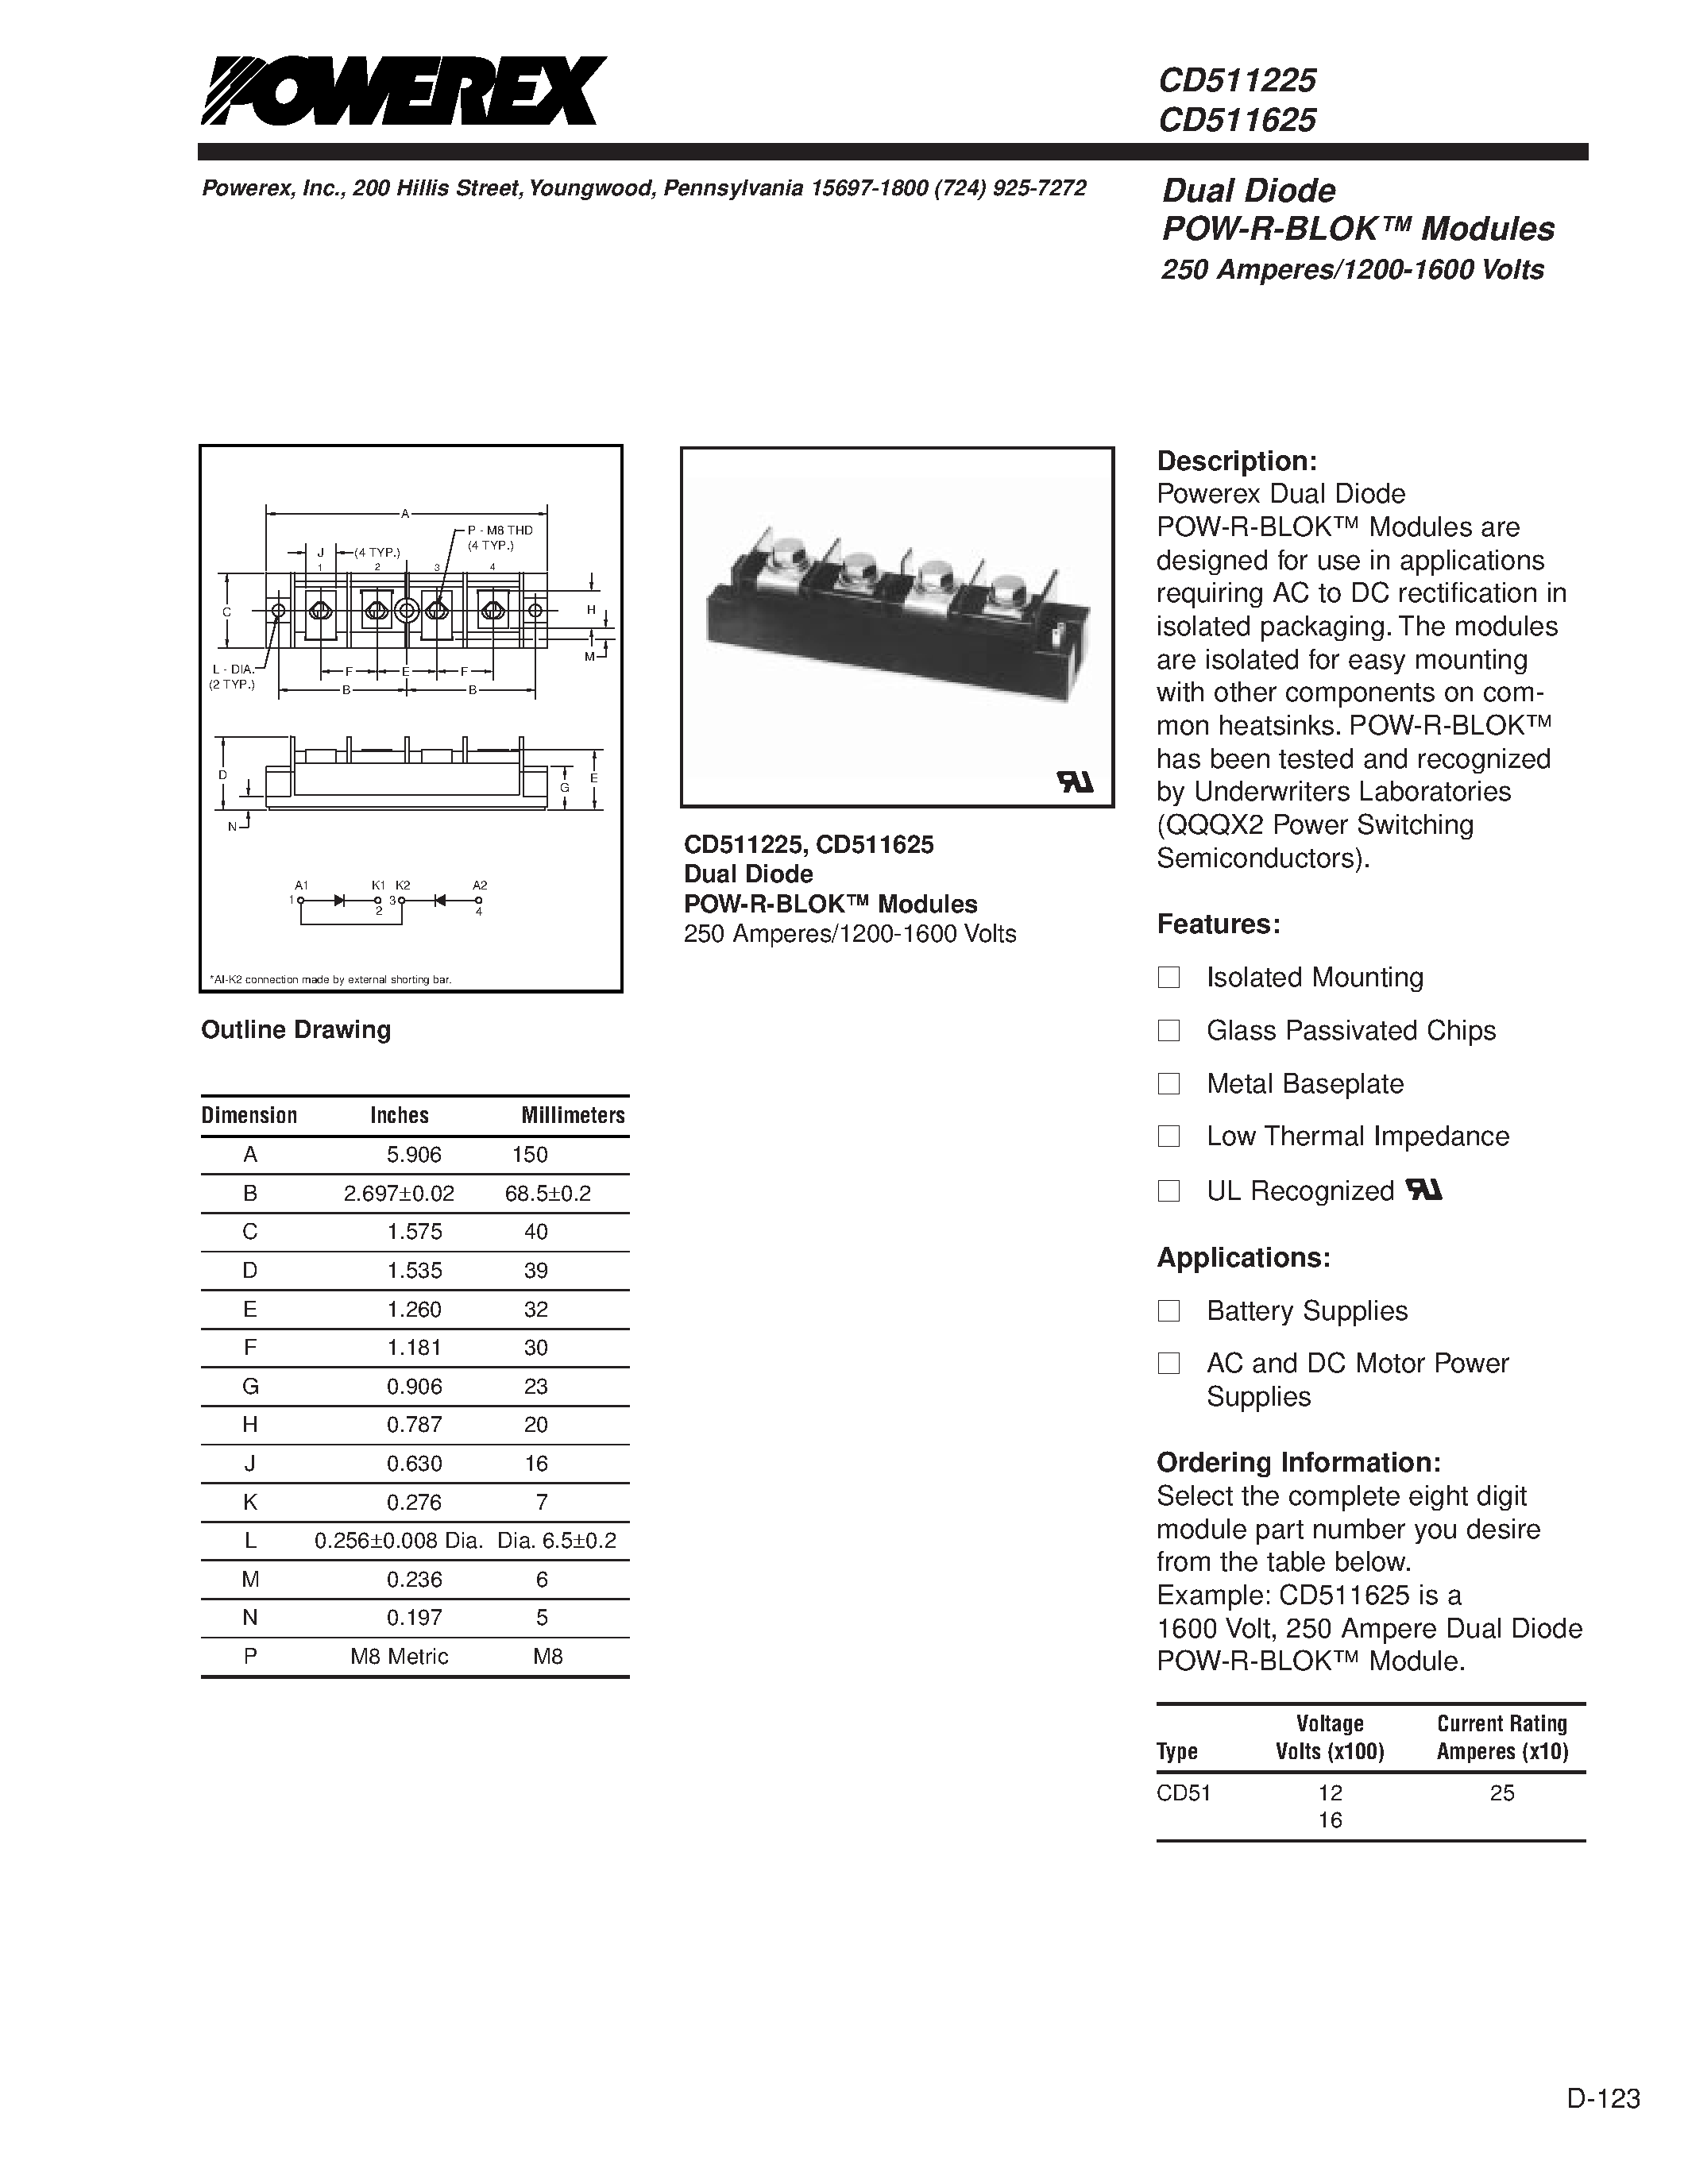 Даташит CD511625 - Dual Diode POW-R-BLOK Modules 250 Amperes/1200-1600 Volts страница 1